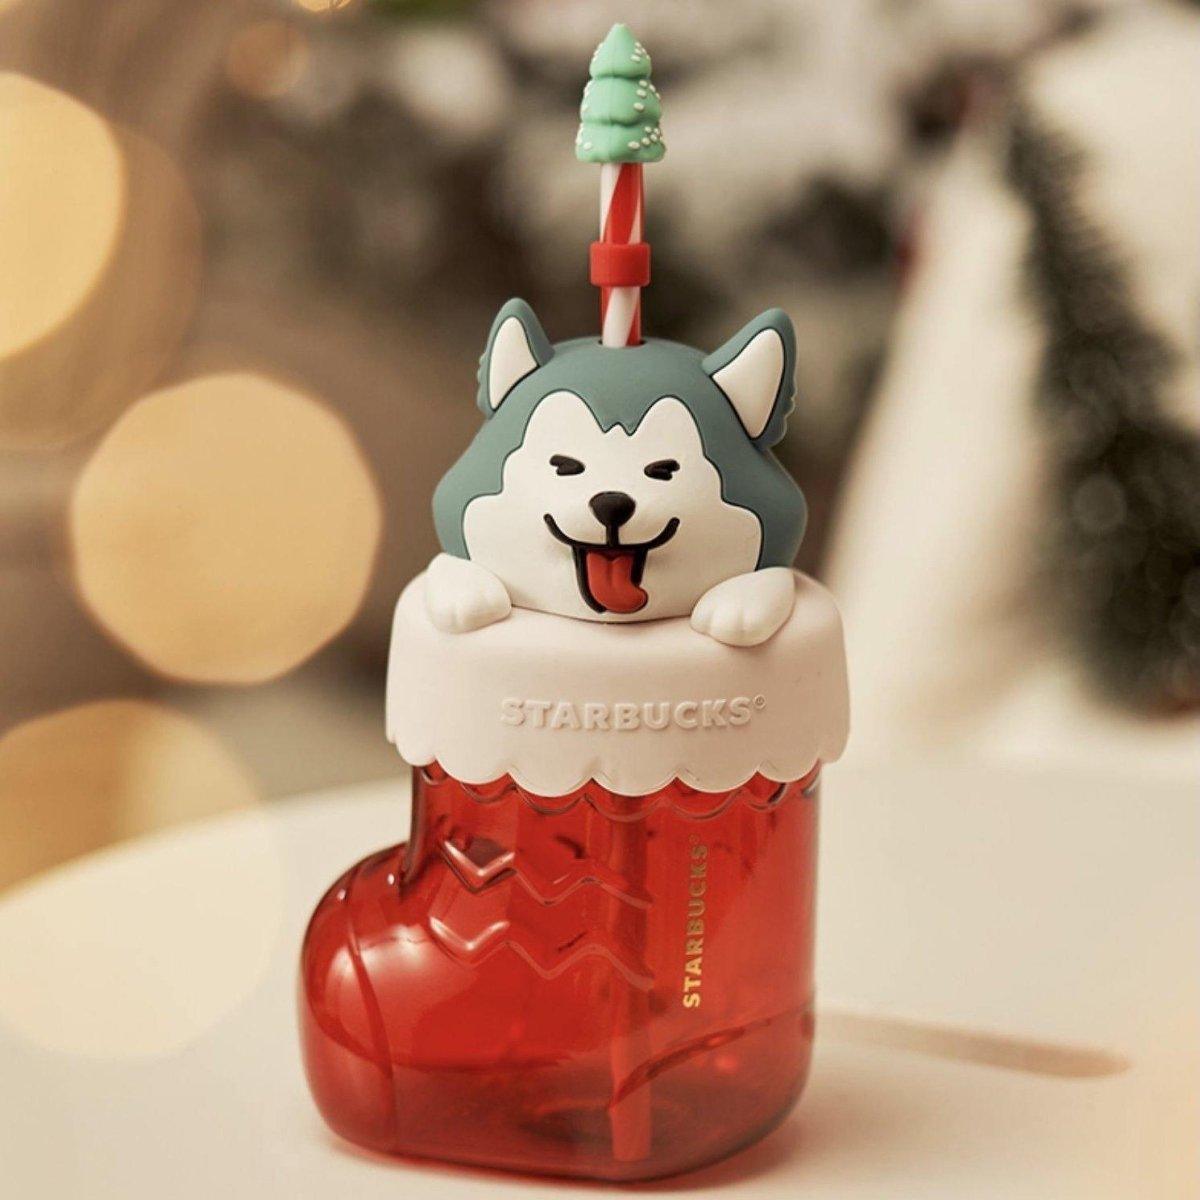 Starbucks China Red Christmas Stocking 20 oz Glass Straw Cup with Huslky Dog Lid (Starbucks China Christmas 2021) - Ann Ann Starbucks